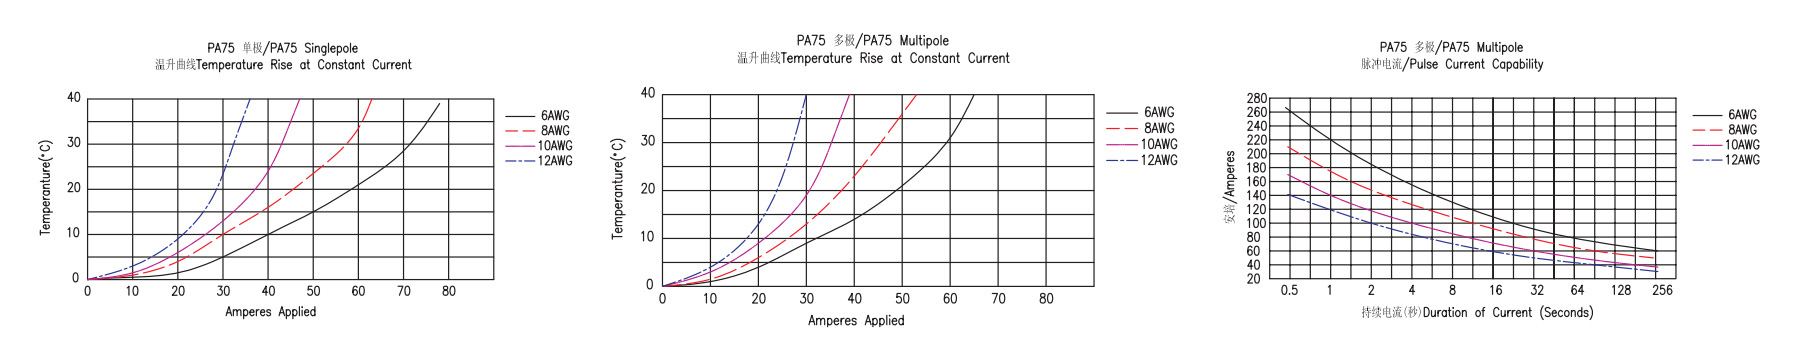 Combinación do conector de alimentación PA75-3